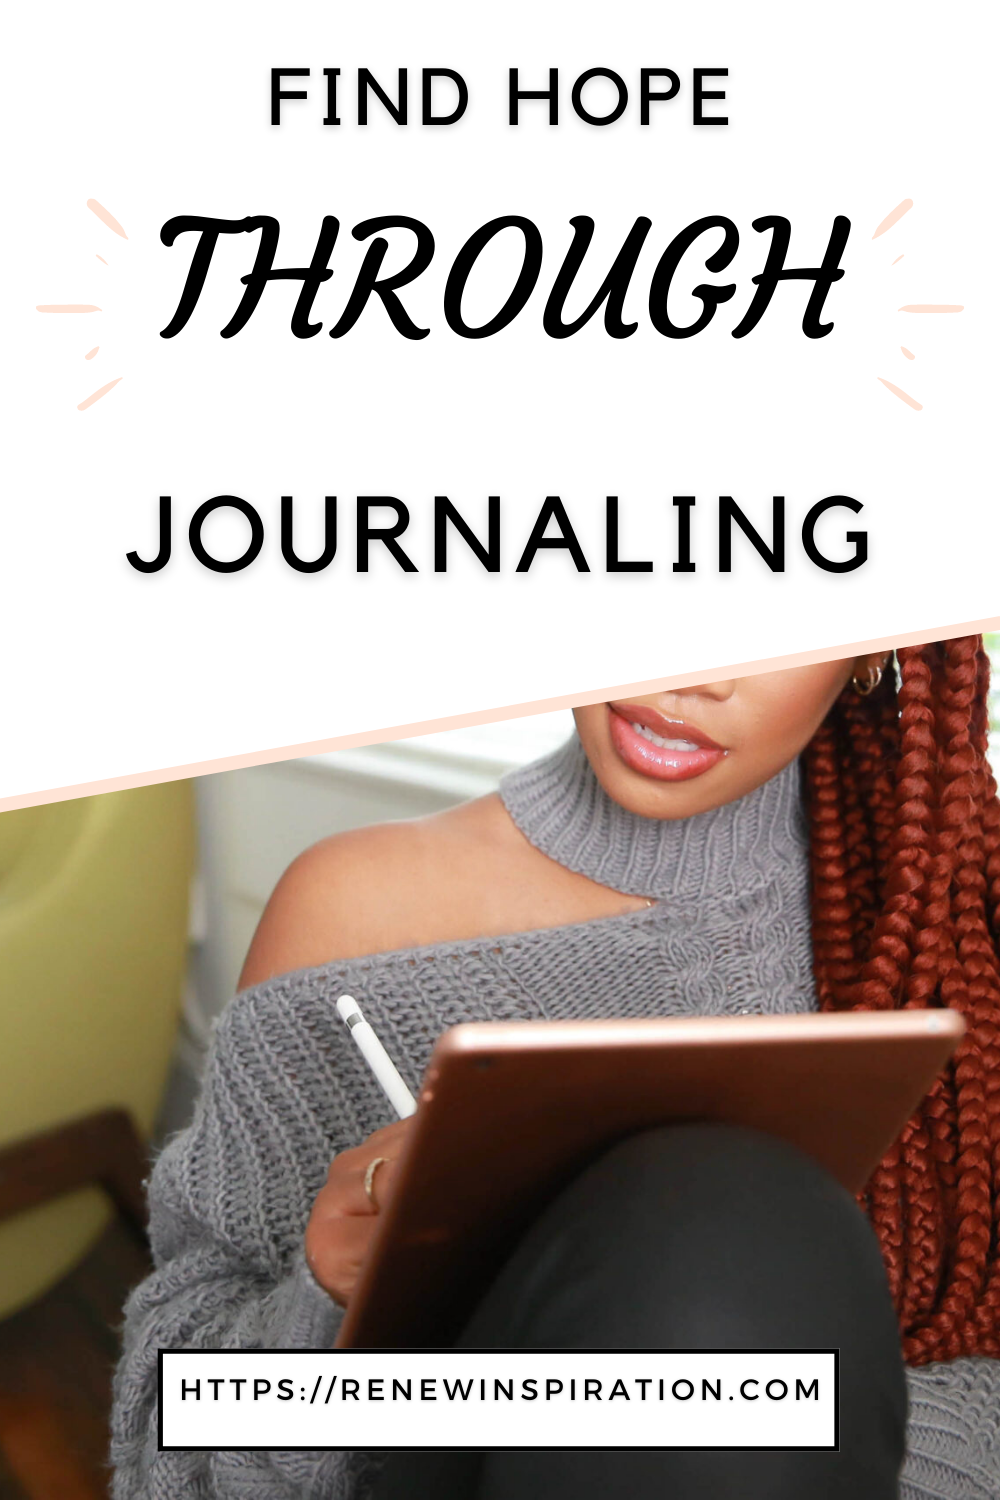 Renew Inspiration, Find Hope Through Journaling